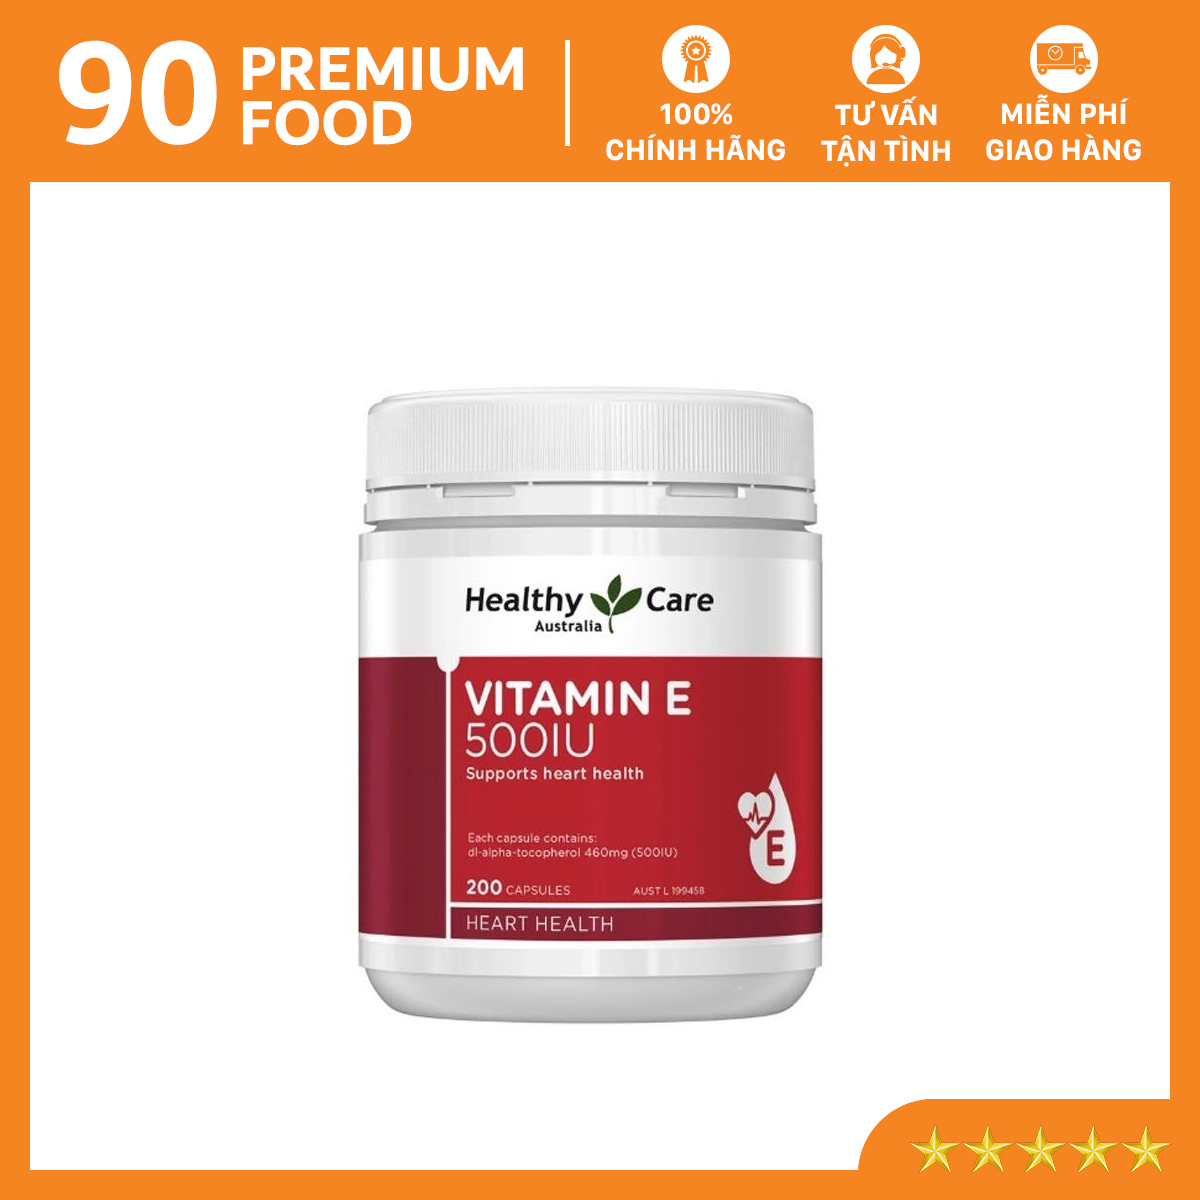 Healthy Care Vitamin E 500IU Úc - Hộp 200 viên